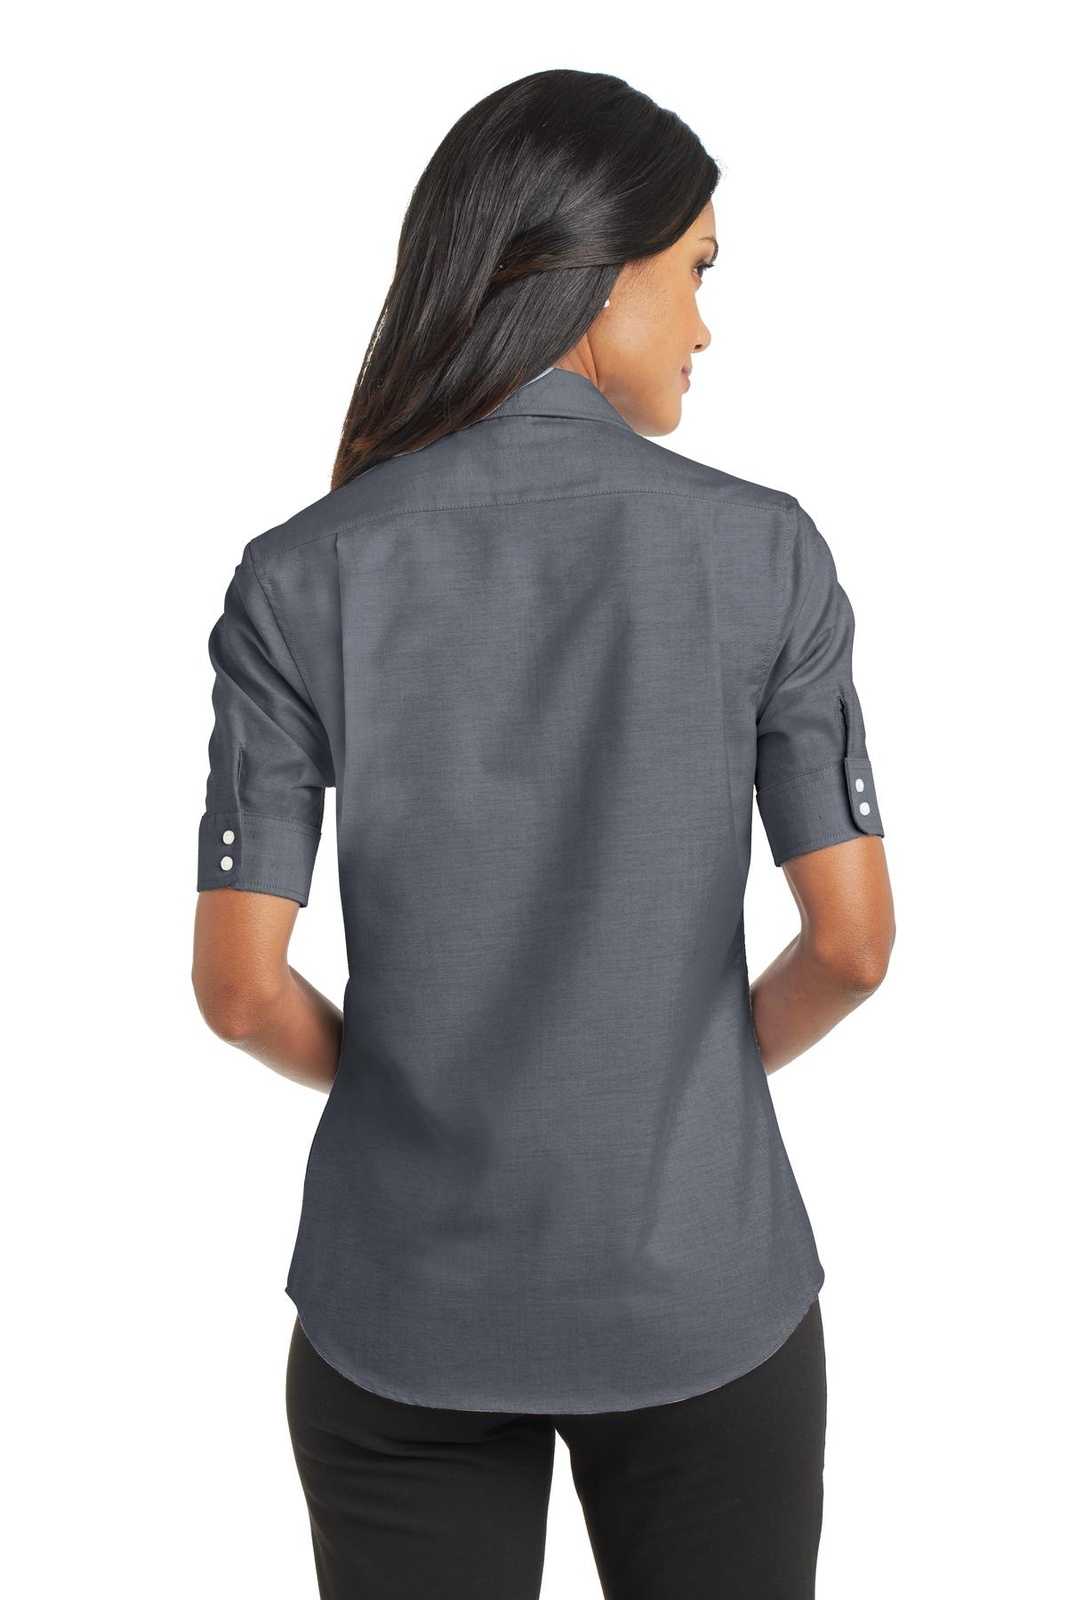 Port Authority L659 Ladies Short Sleeve Superpro Oxford Shirt - Black - HIT a Double - 2